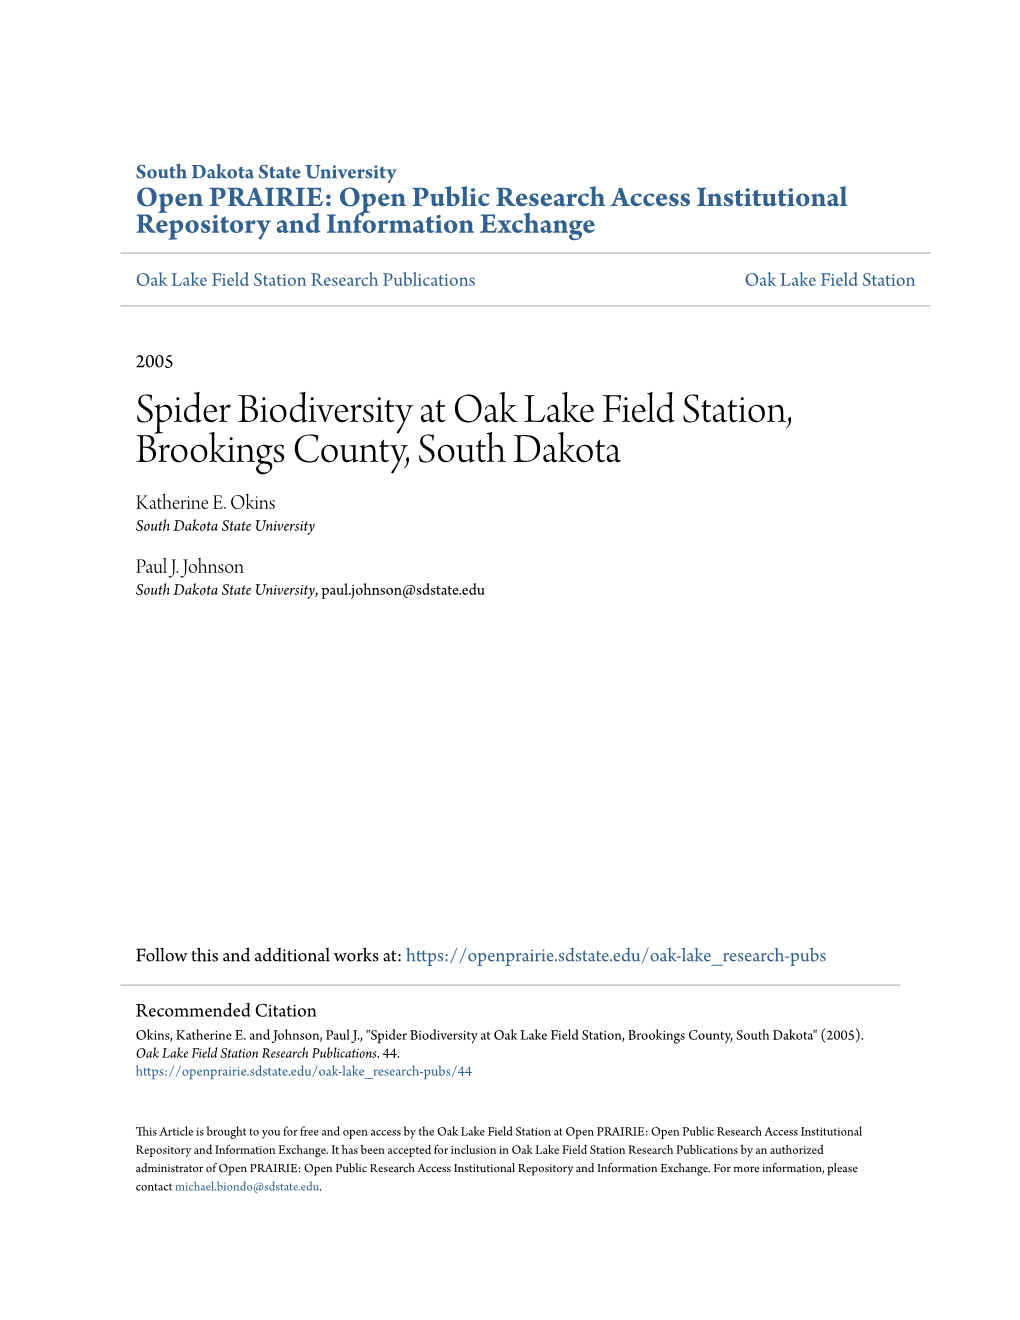 Spider Biodiversity at Oak Lake Field Station, Brookings County, South Dakota Katherine E